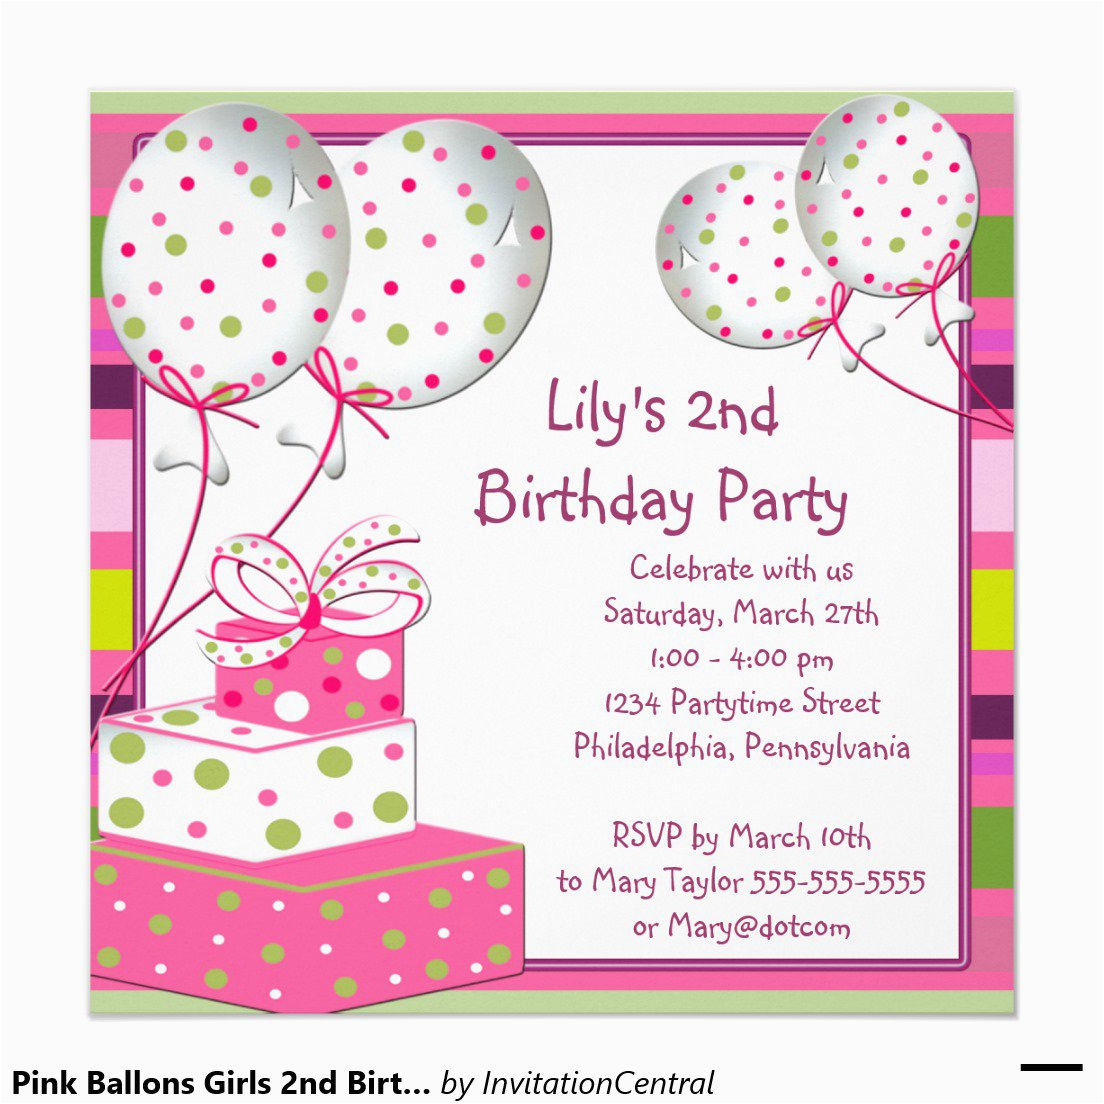 e-invites-for-birthday-party-birthday-party-invitation-card-best-party-ideas-birthdaybuzz